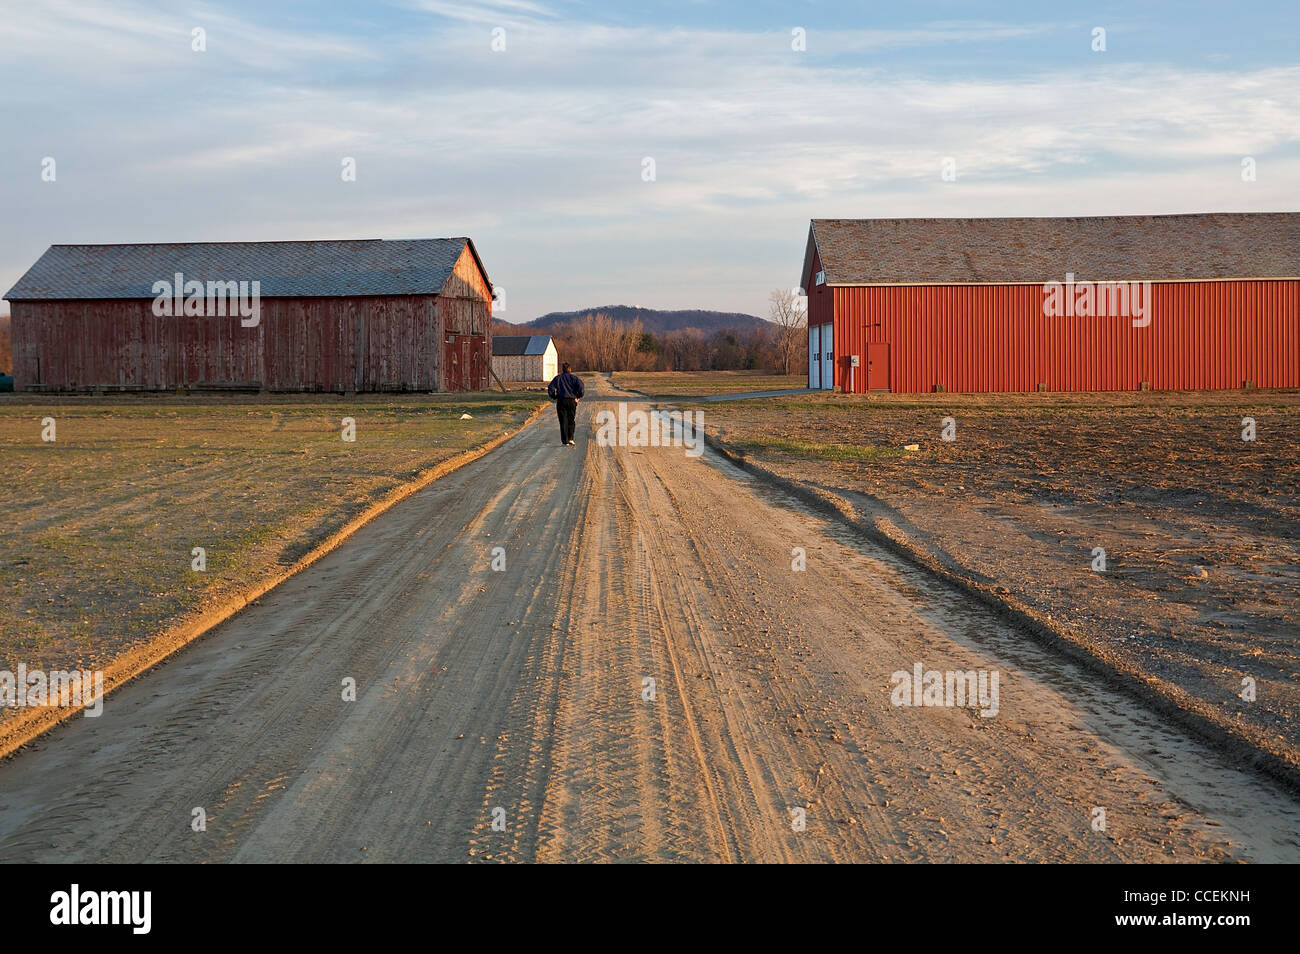 A man walks down a dirt road between barns in Hatfield, Massachusetts Stock Photo